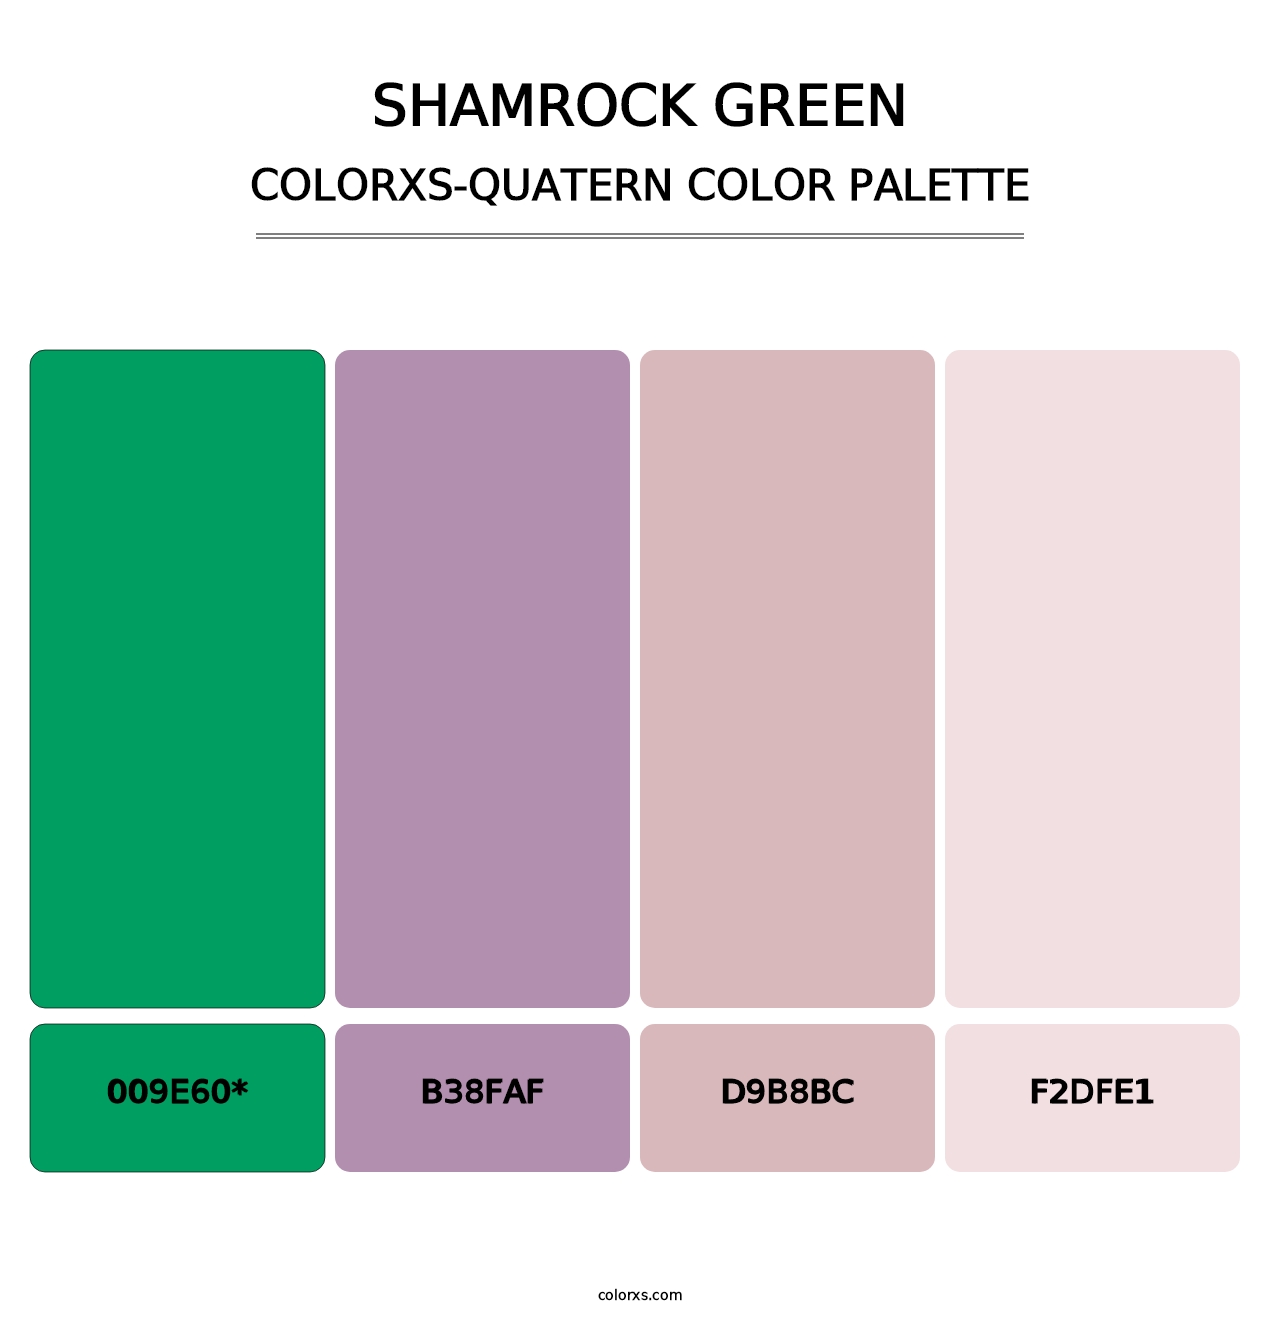 Shamrock Green - Colorxs Quatern Palette